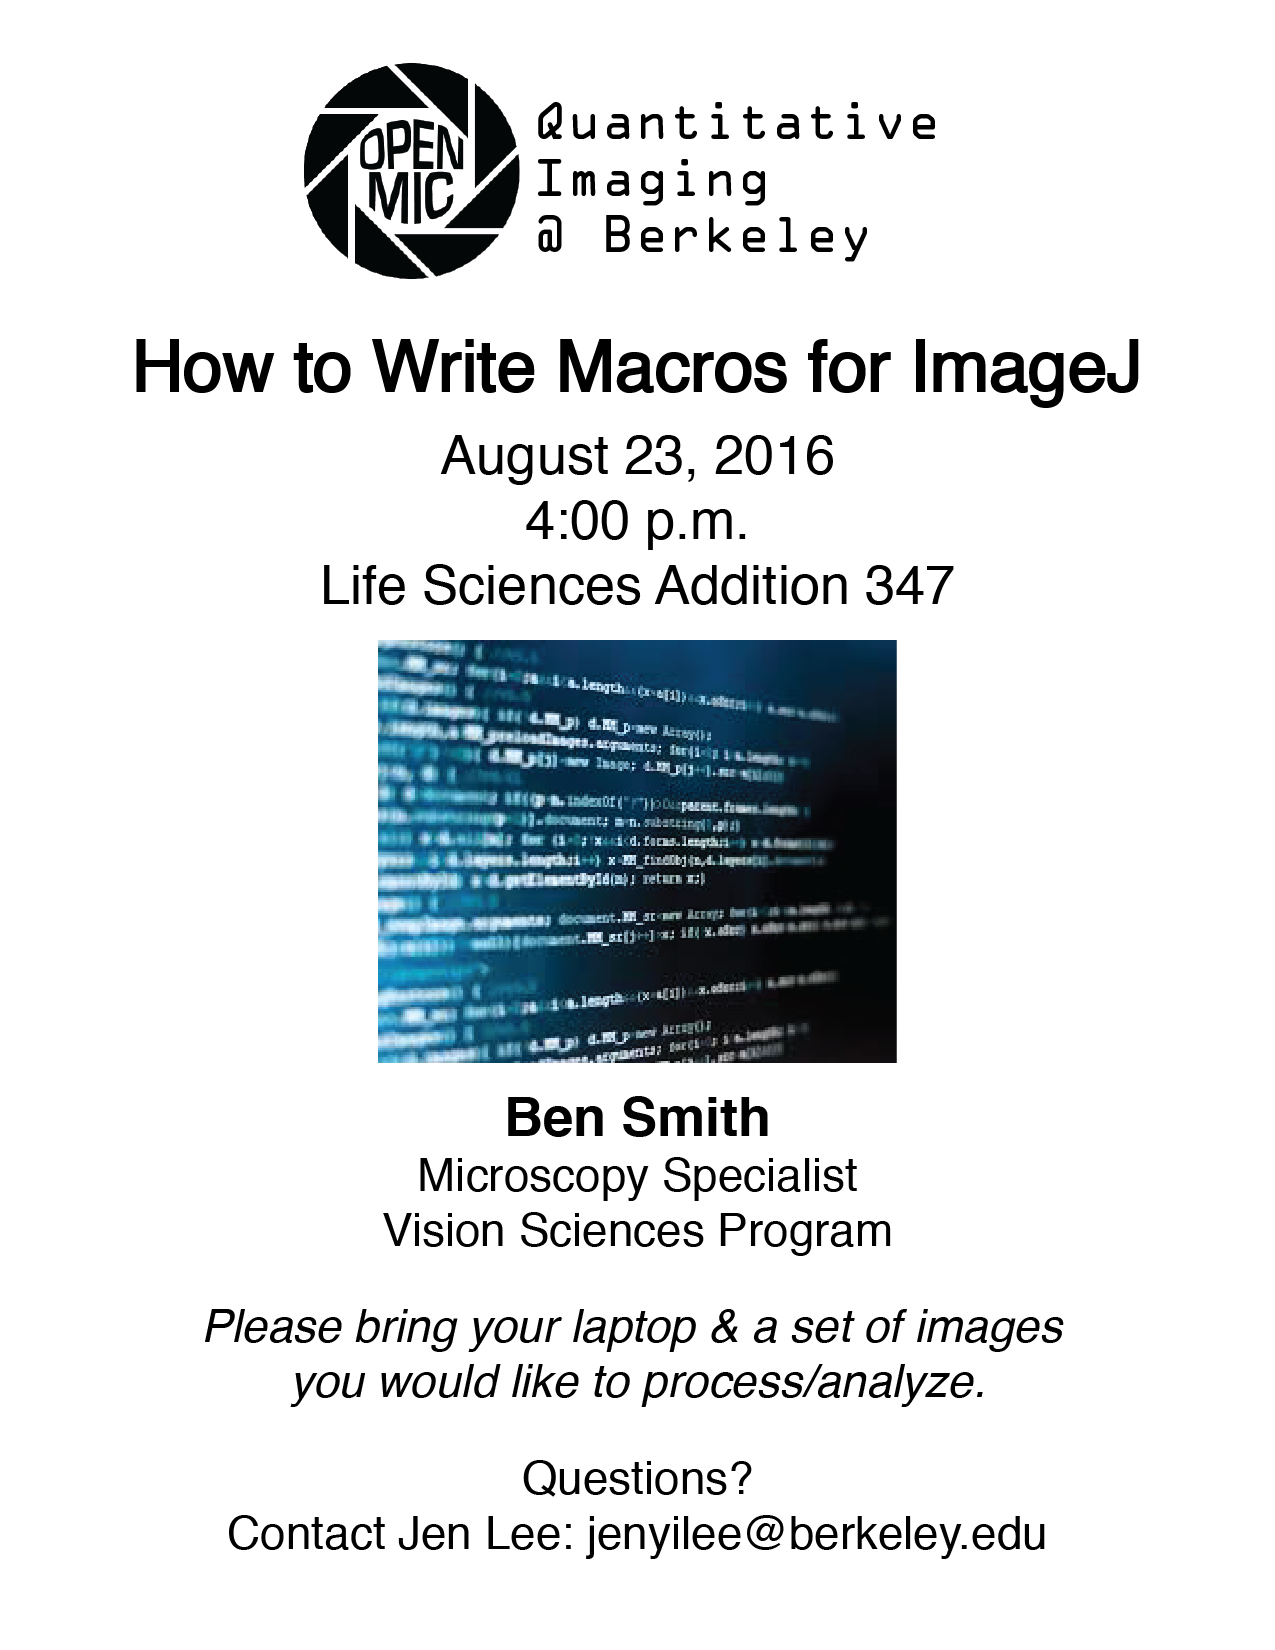 Next Meeting: How to Write Macros for ImageJ – open mic @ berkeley